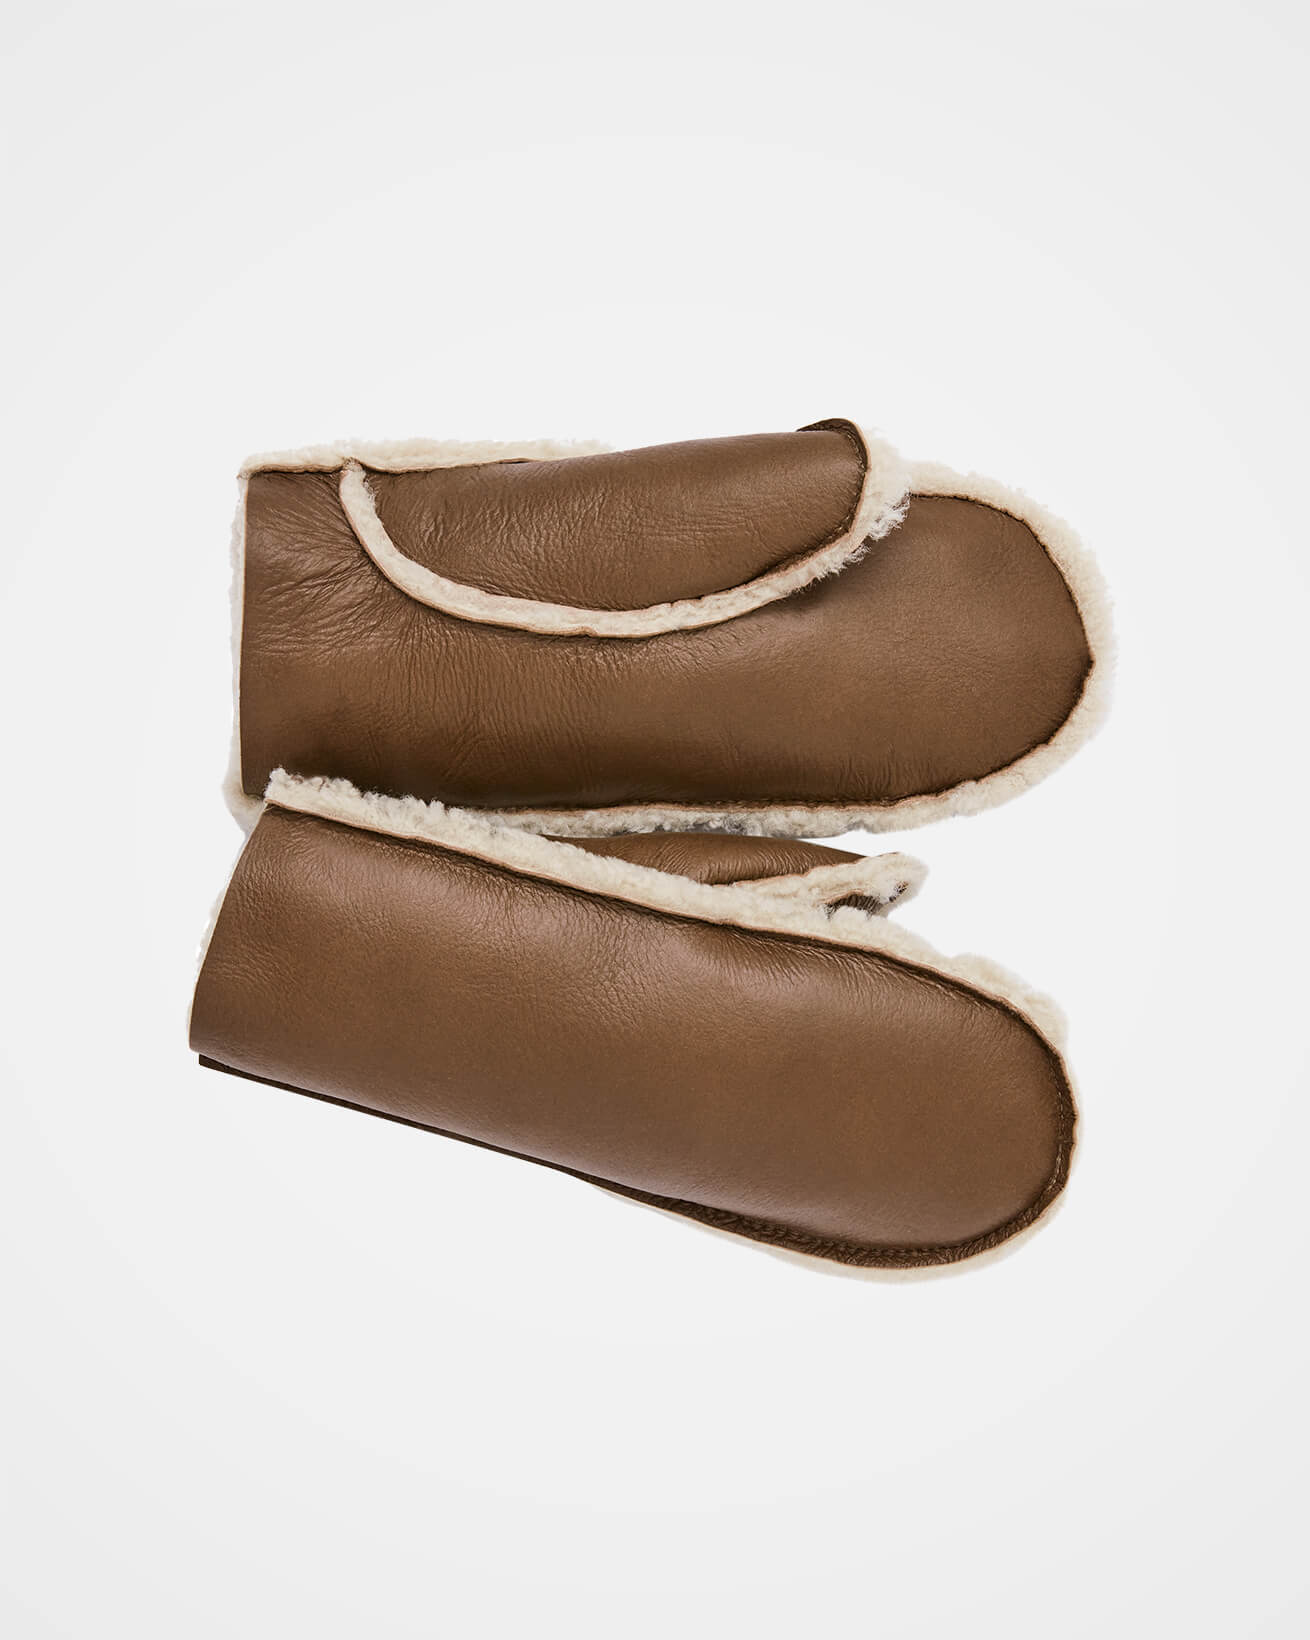 Men's Women's Genuine Sheepskin Slippers Brown 100% Fur Hand Crafted Soft Sole